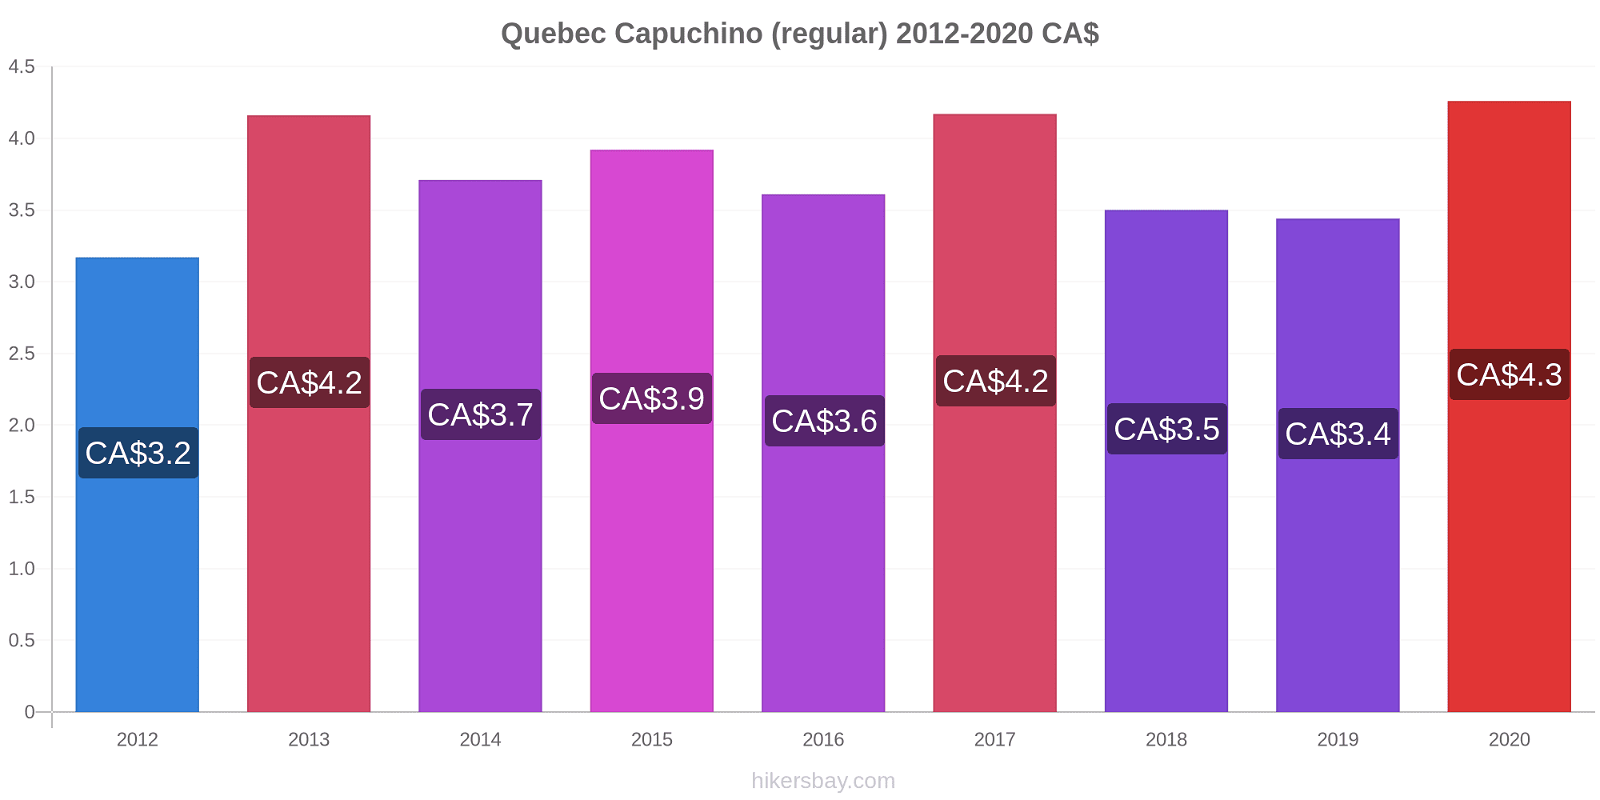 Quebec cambios de precios Capuchino (regular) hikersbay.com